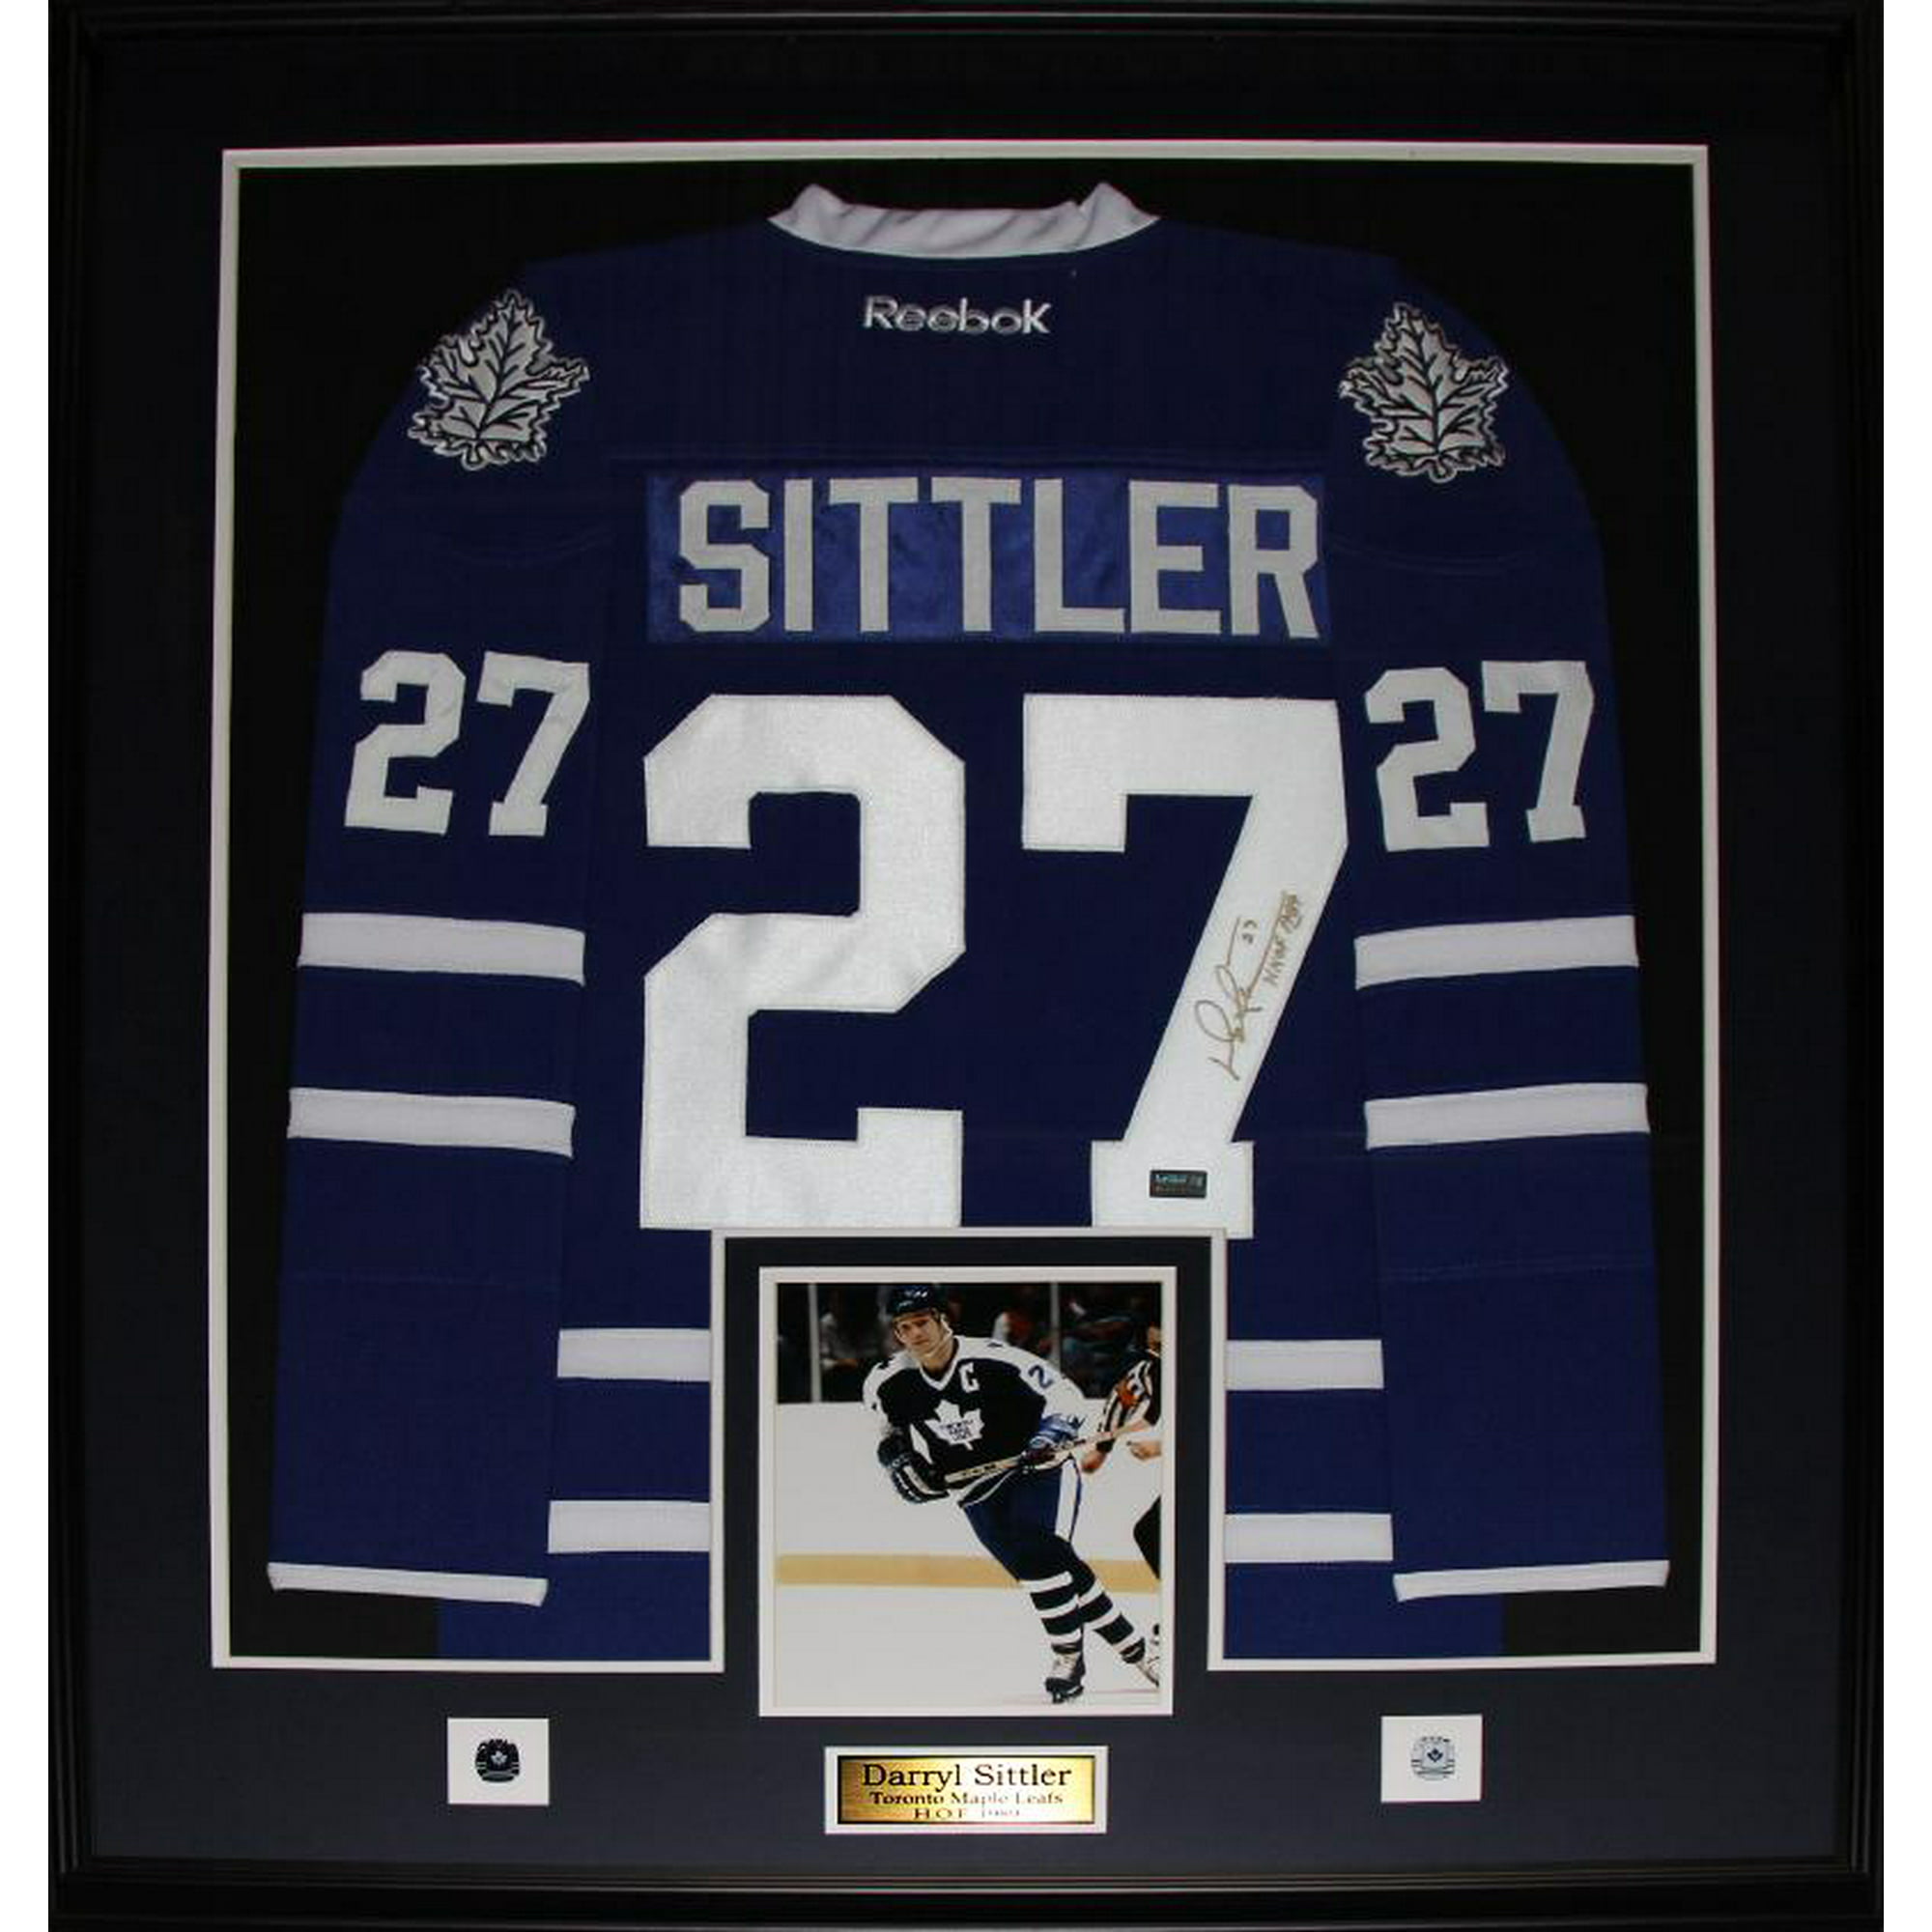 Darryl Sittler NHL Memorabilia, Darryl Sittler Collectibles